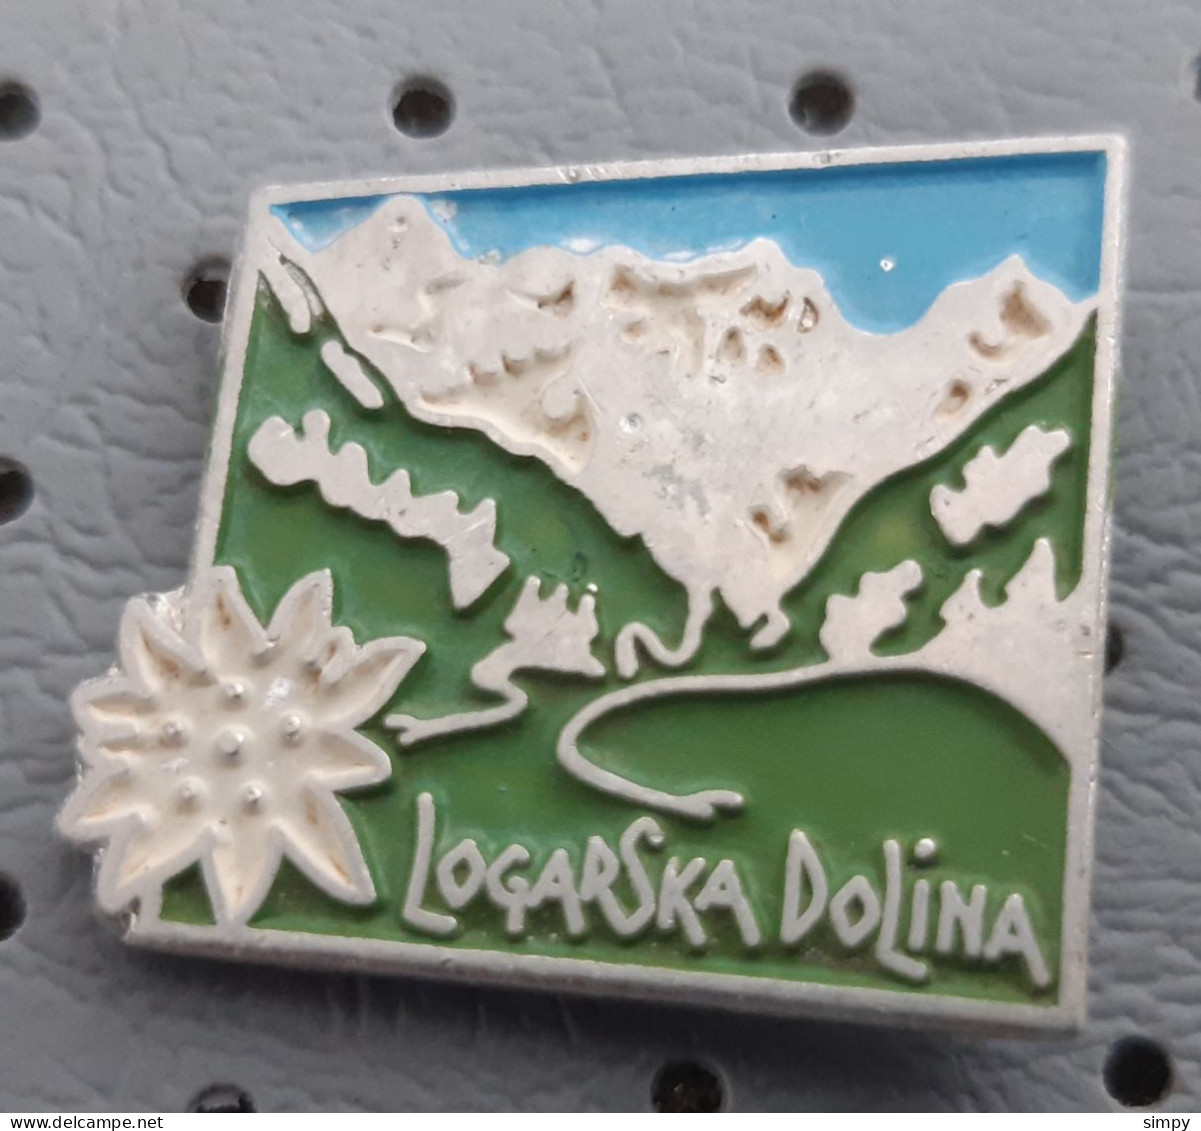 Logarska Dolina Logar Valley Alpinism, Mountaineering Slovenia Pin - Alpinismo, Arrampicata